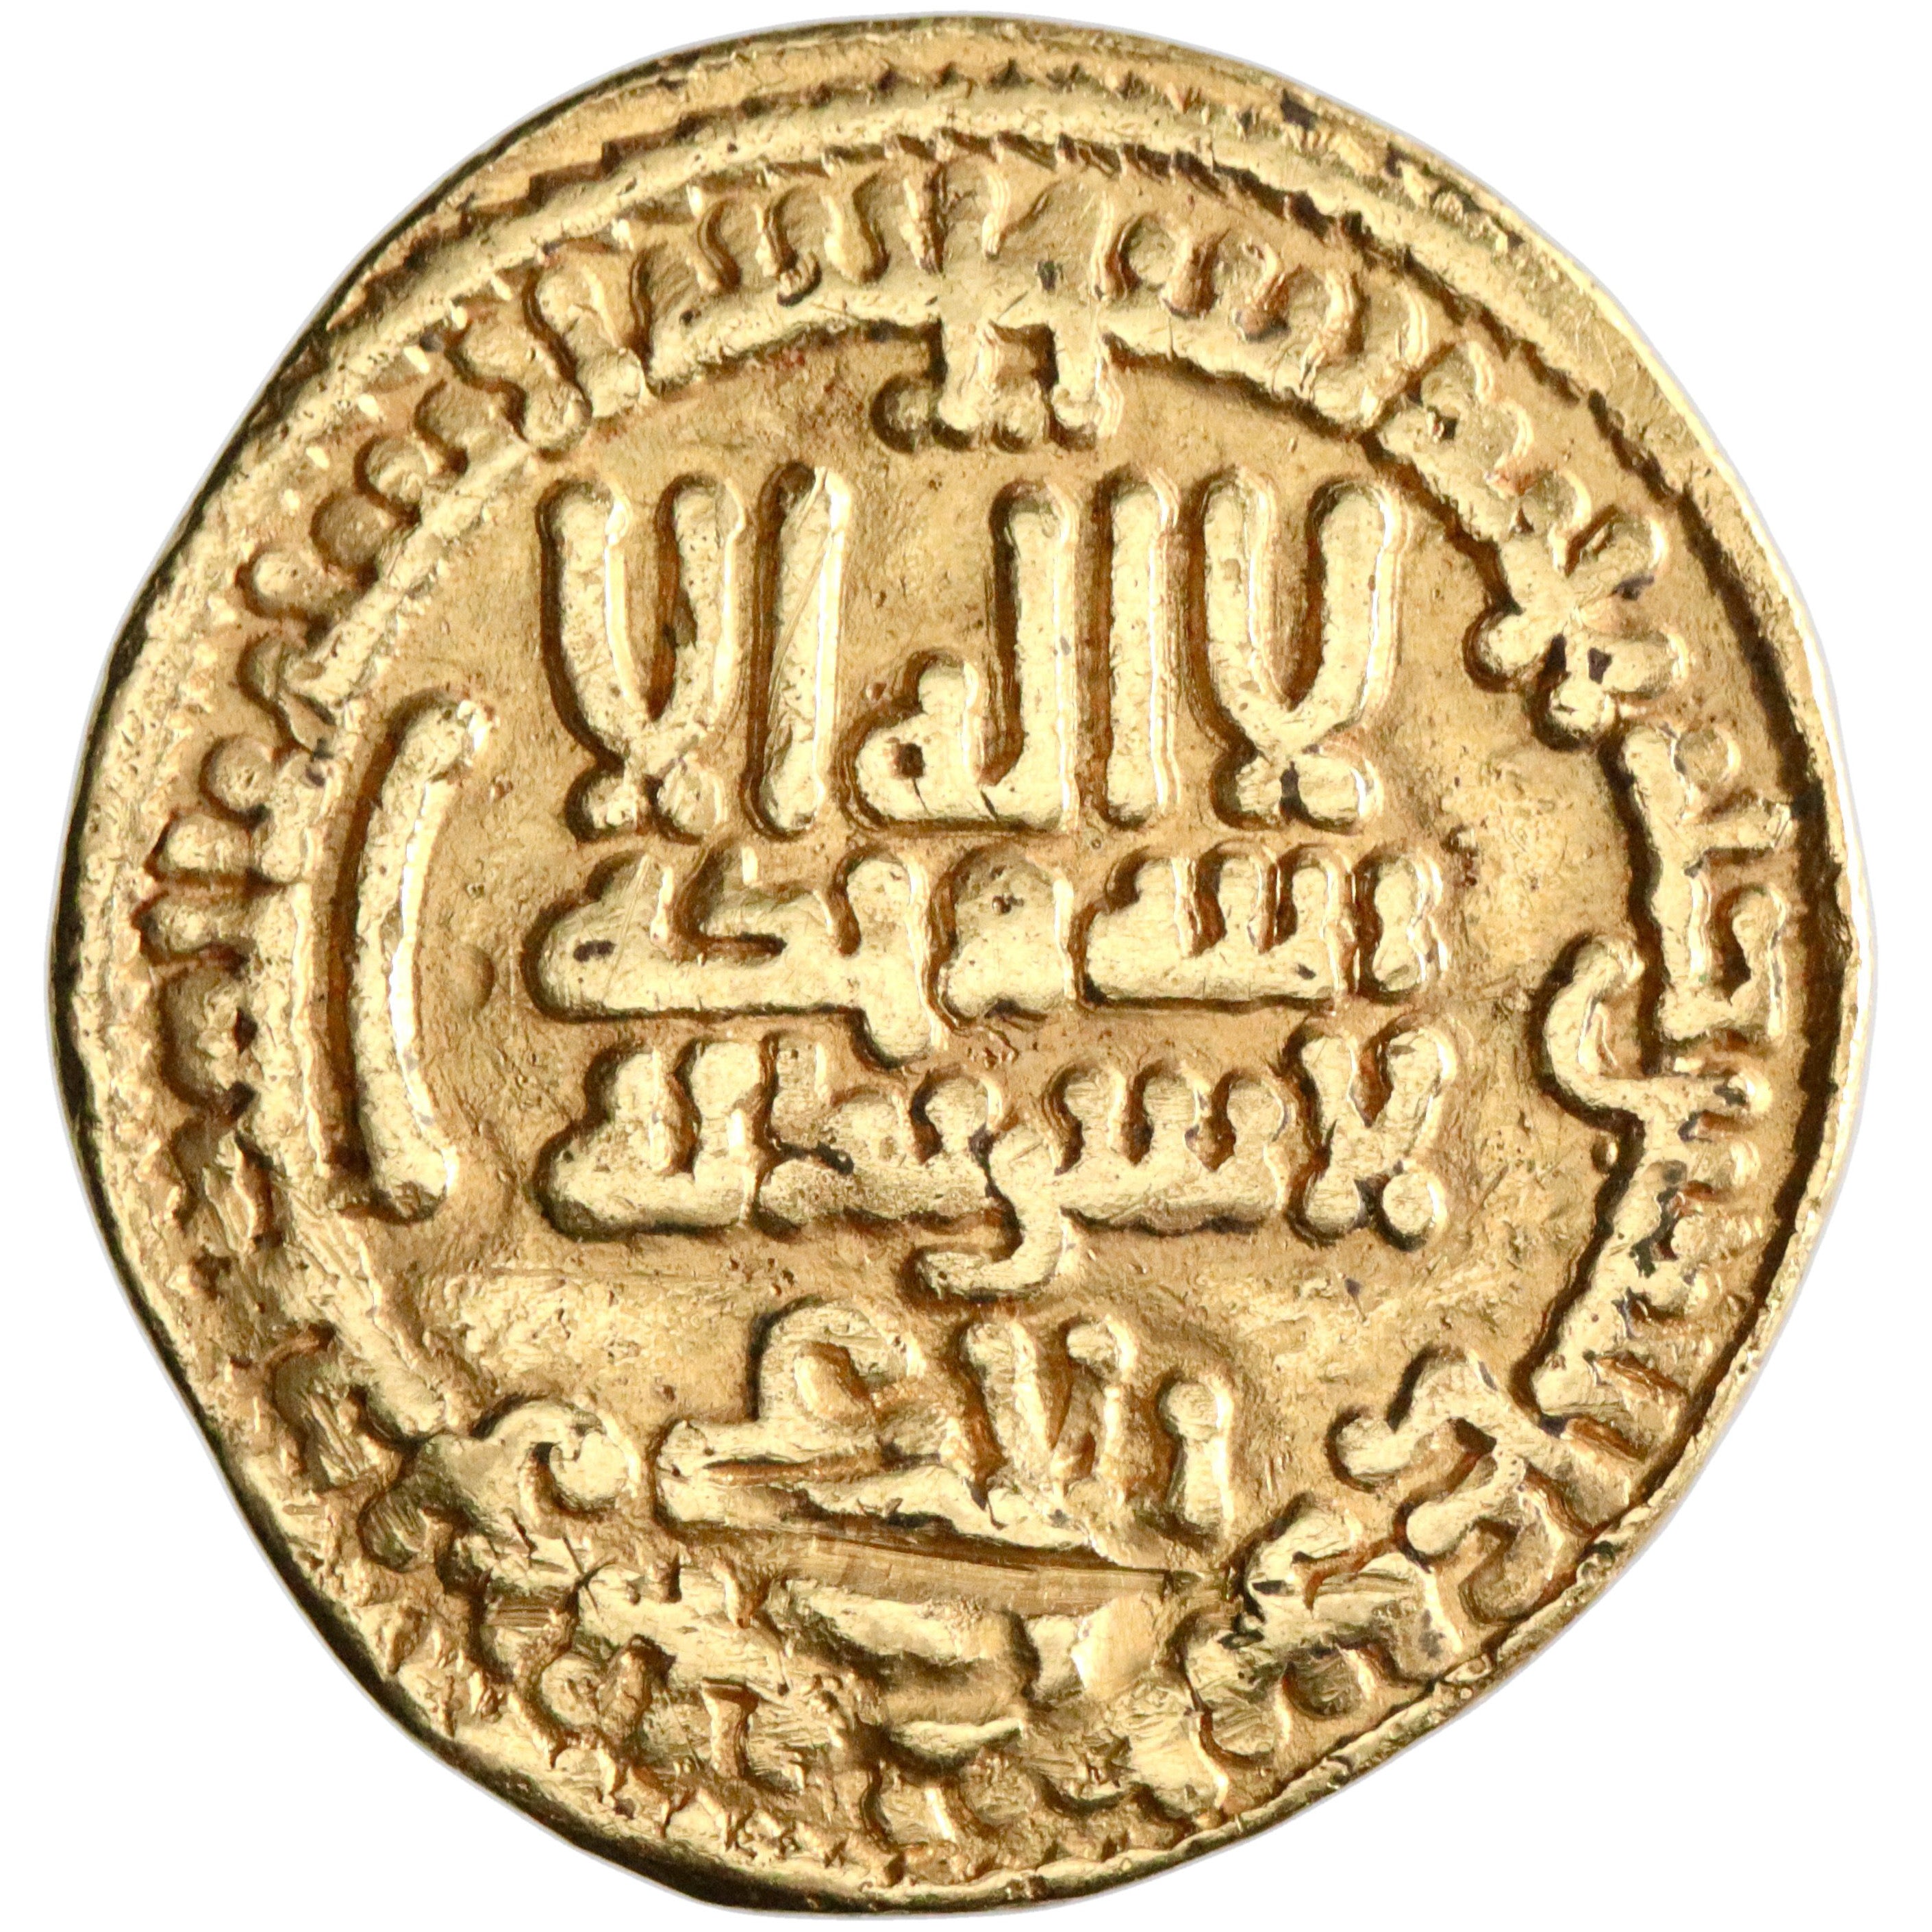 Aghlabid, Ibrahim II, gold dinar, AH 264, citing Balaghi